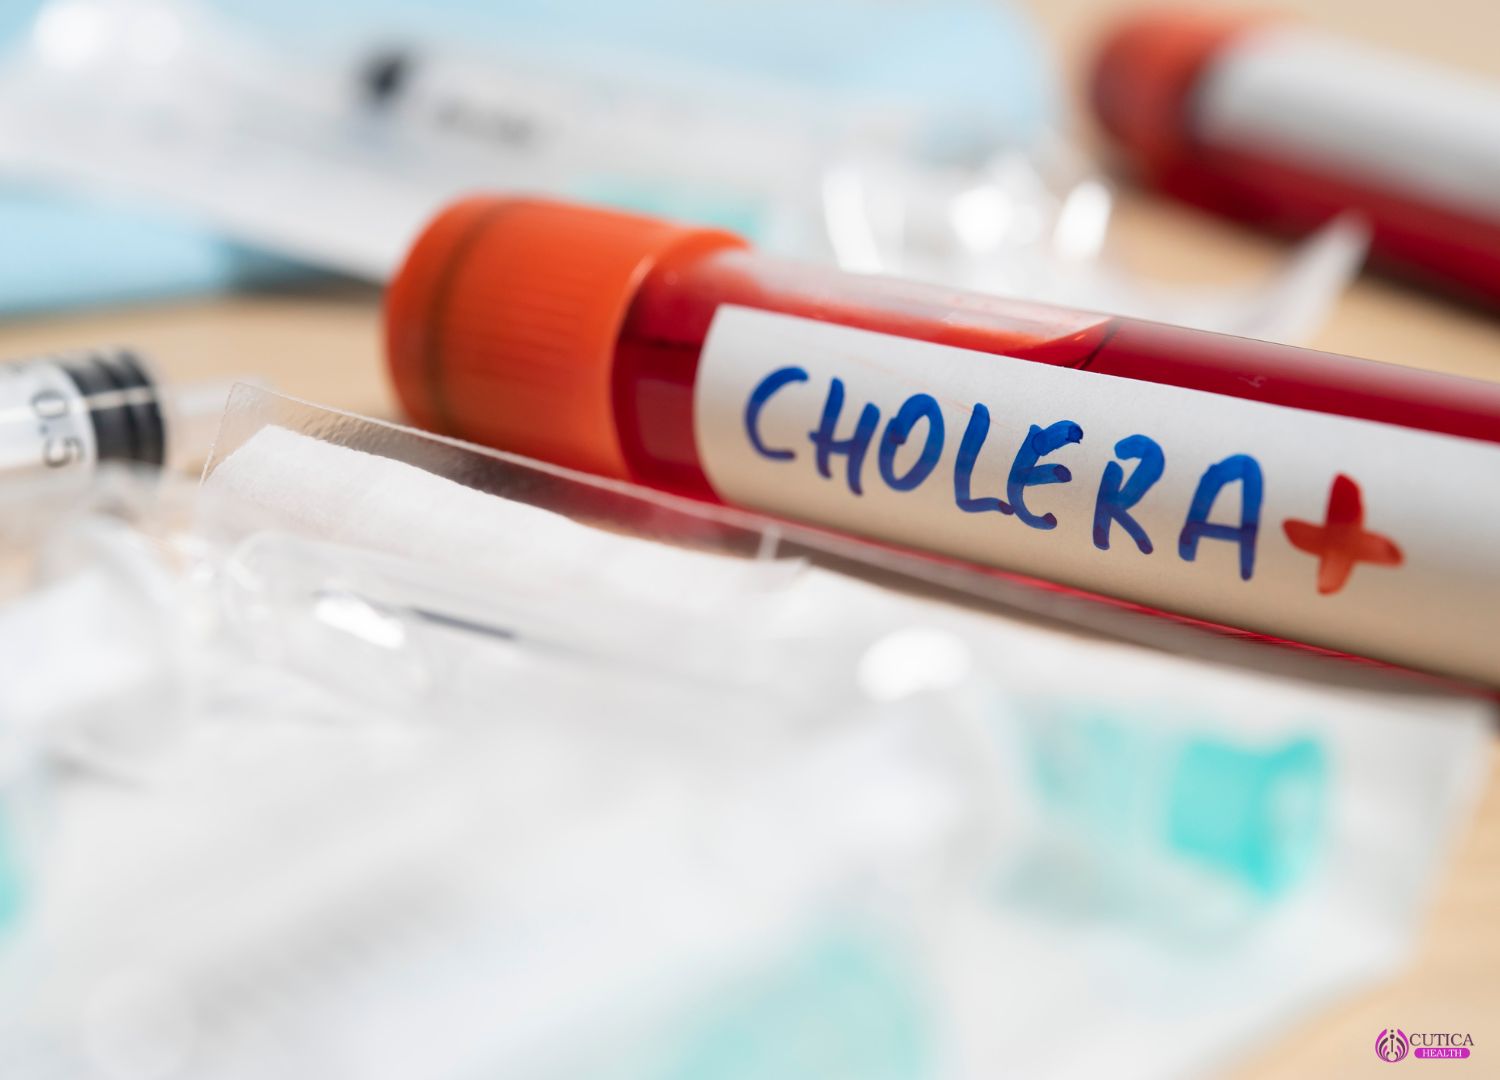 Understanding Cholera Outbreaks